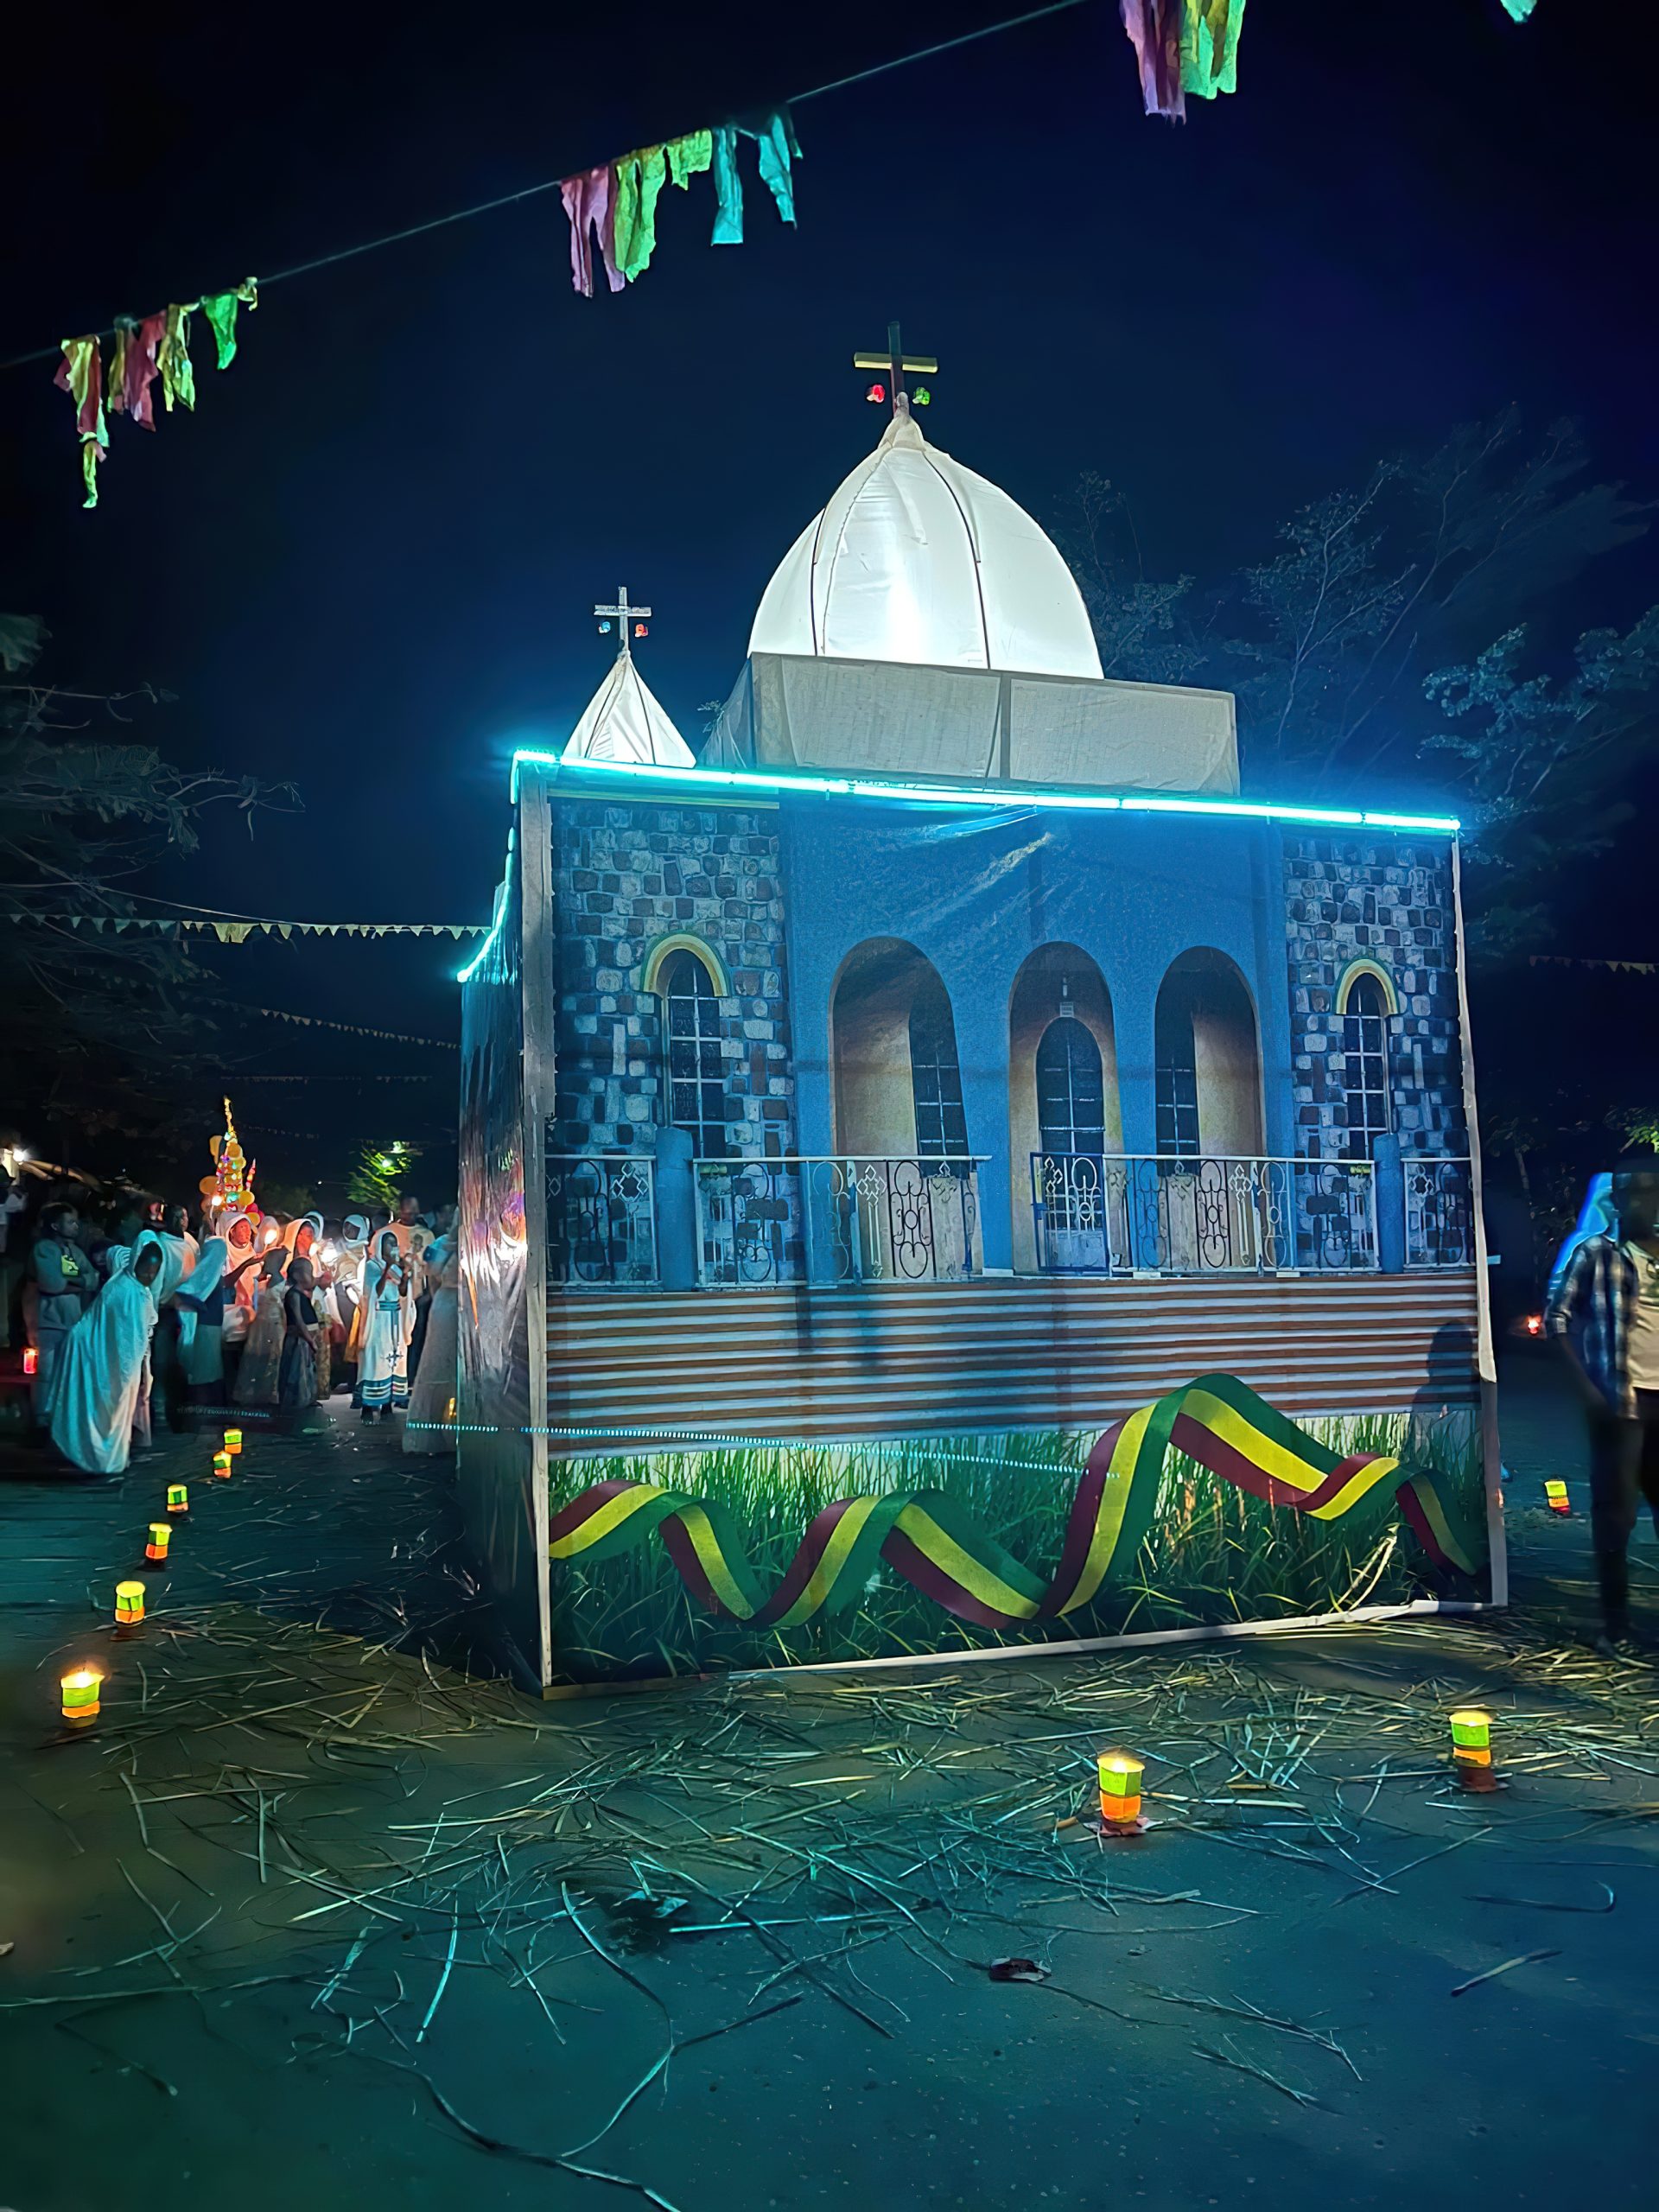 festival of Timqat